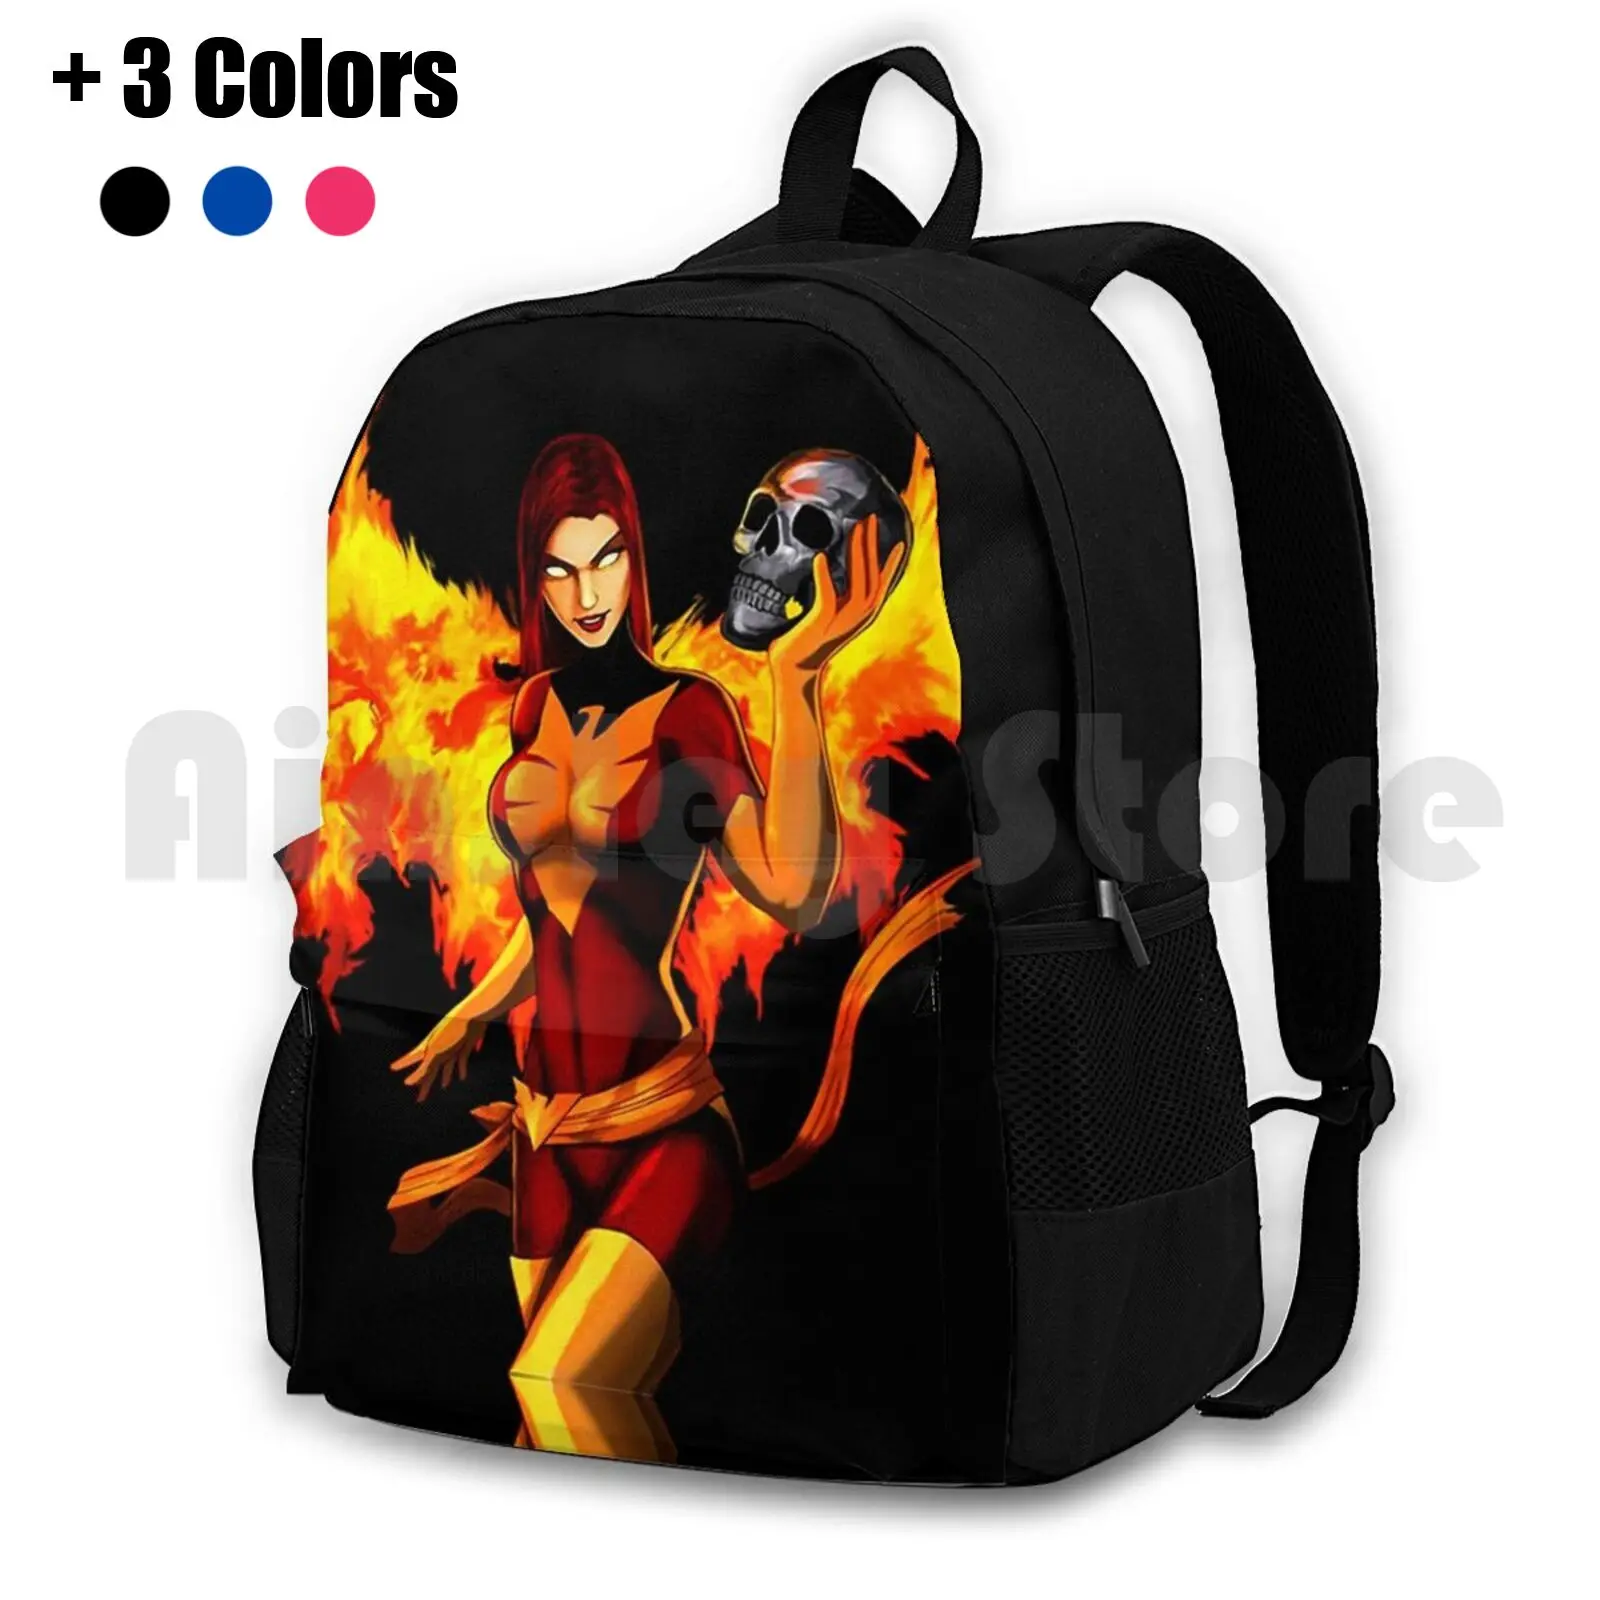 

Girl On Fire Outdoor Hiking Backpack Waterproof Camping Travel Hero Evil Fire Skull Villain Superhero Classic Cult Movie